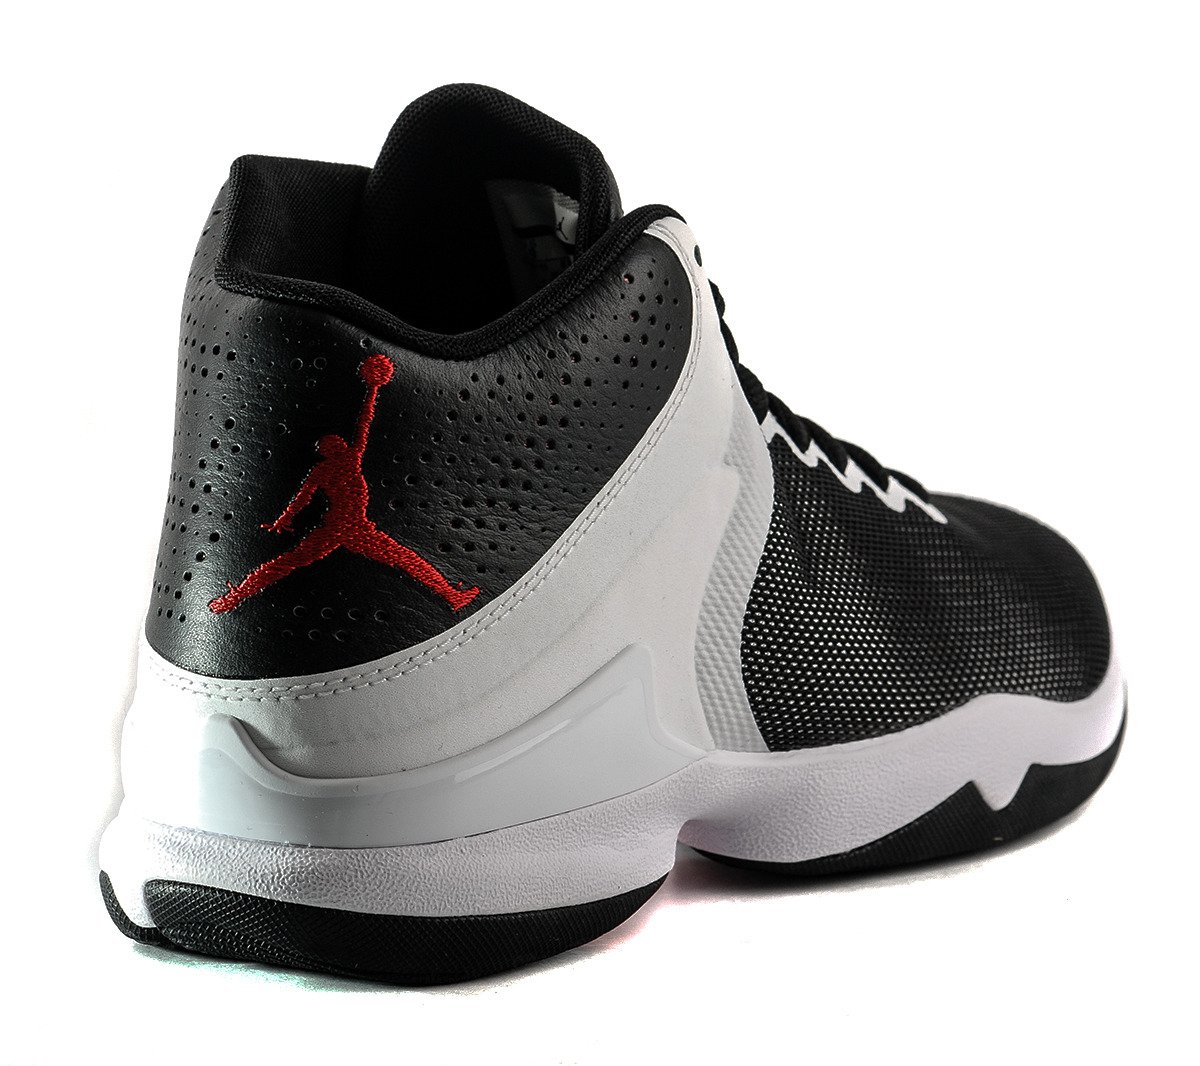 Air Jordan Super Fly 4 PO Basketball Shoes - 819163-002 | Basketball ...